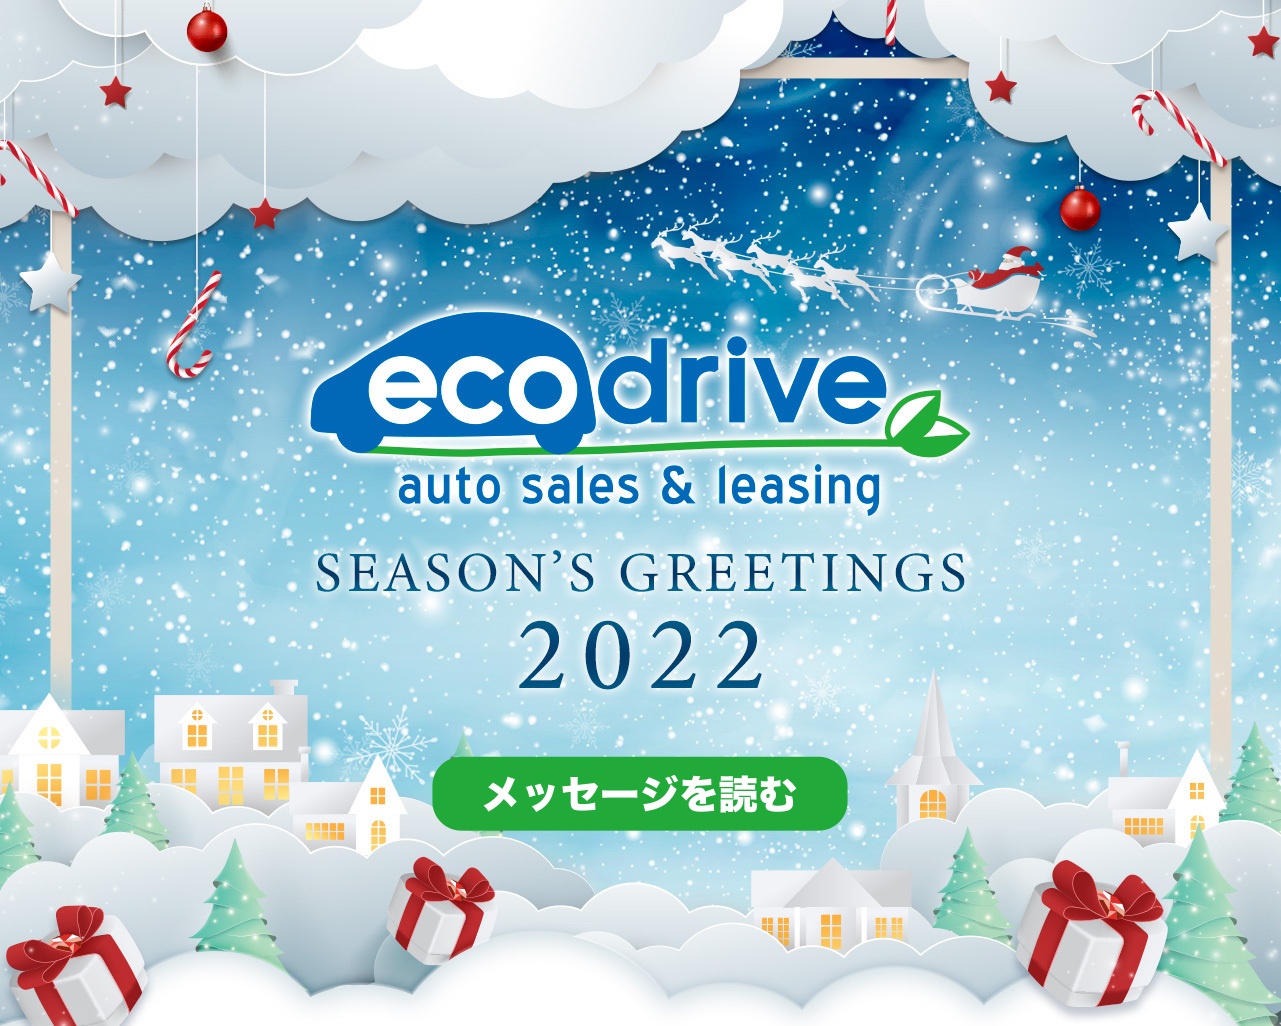 Season's Greetings from Eco Drive 2022